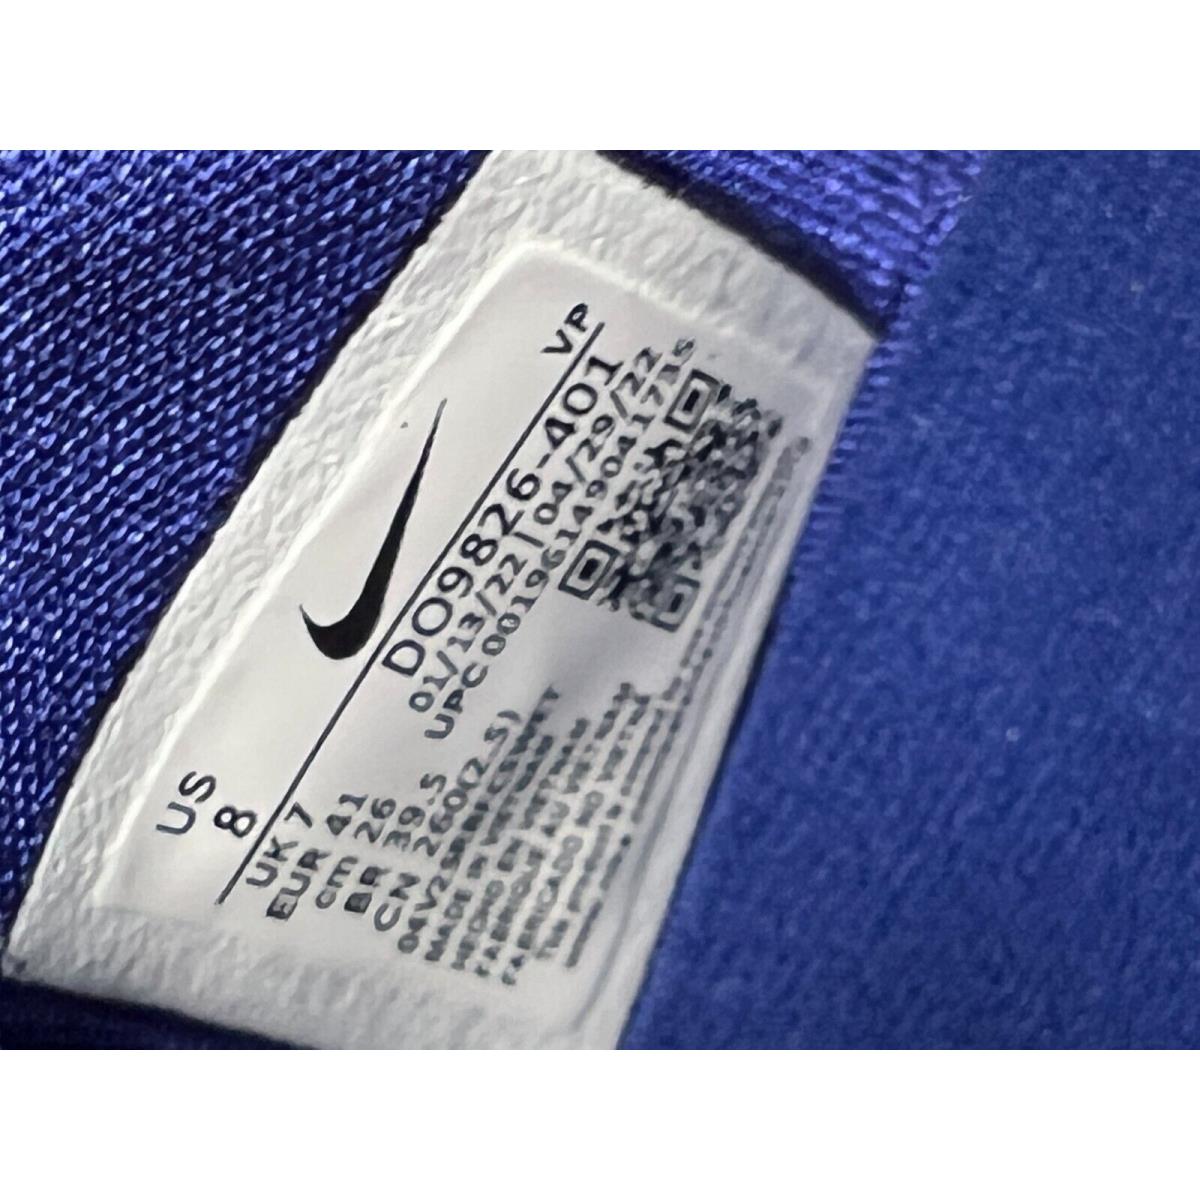 Nike shoes  - Blue 3